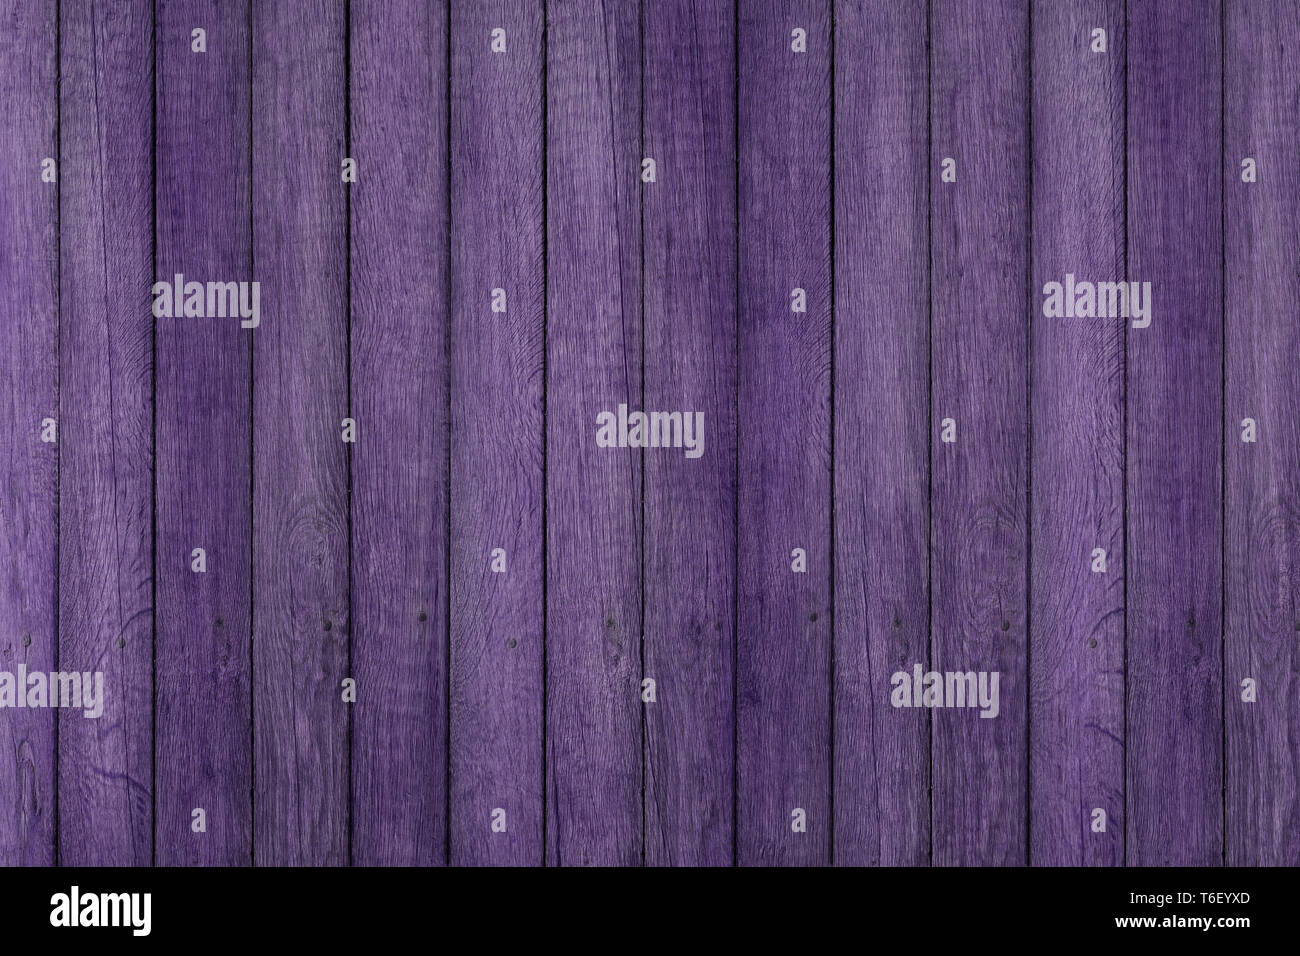 purple grunge wood pattern texture background, wooden planks. Stock Photo